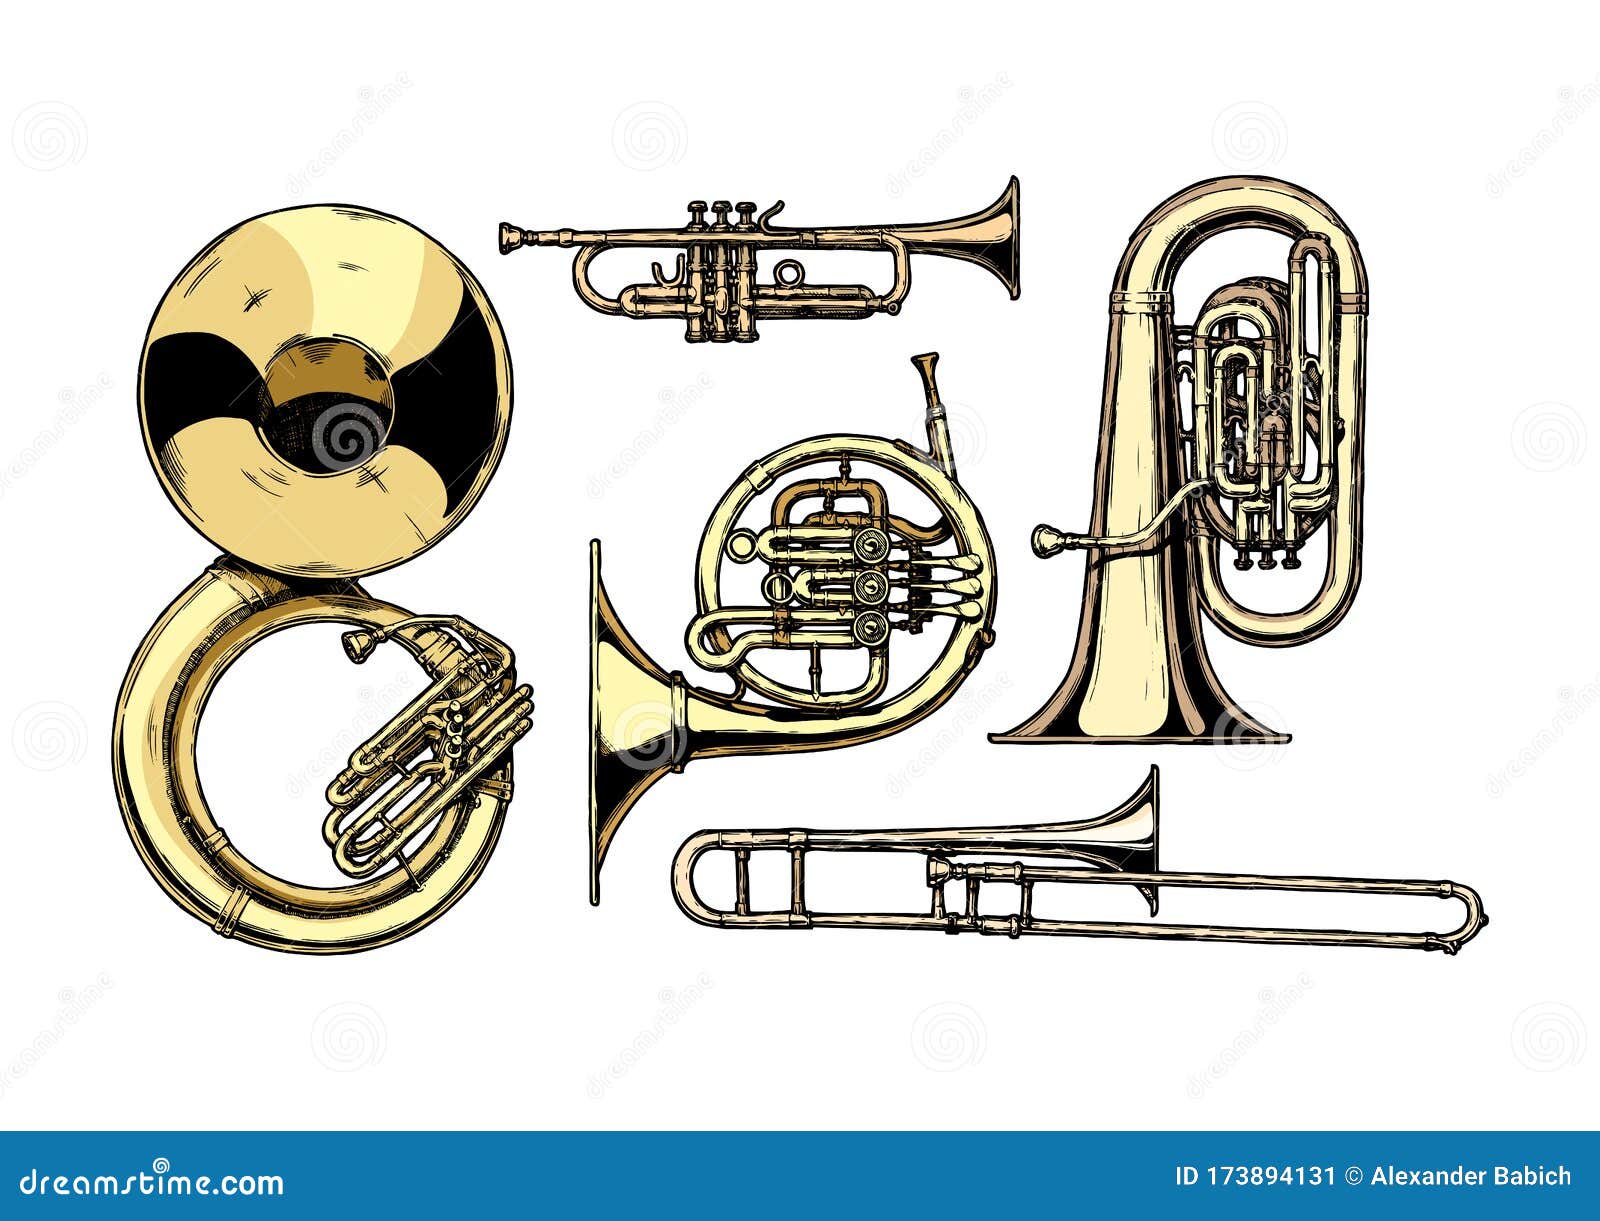 https://thumbs.dreamstime.com/z/brass-musical-instrument-vector-hand-drawn-set-brass-musical-instruments-sousaphone-trumpet-french-horn-tuba-trombone-173894131.jpg